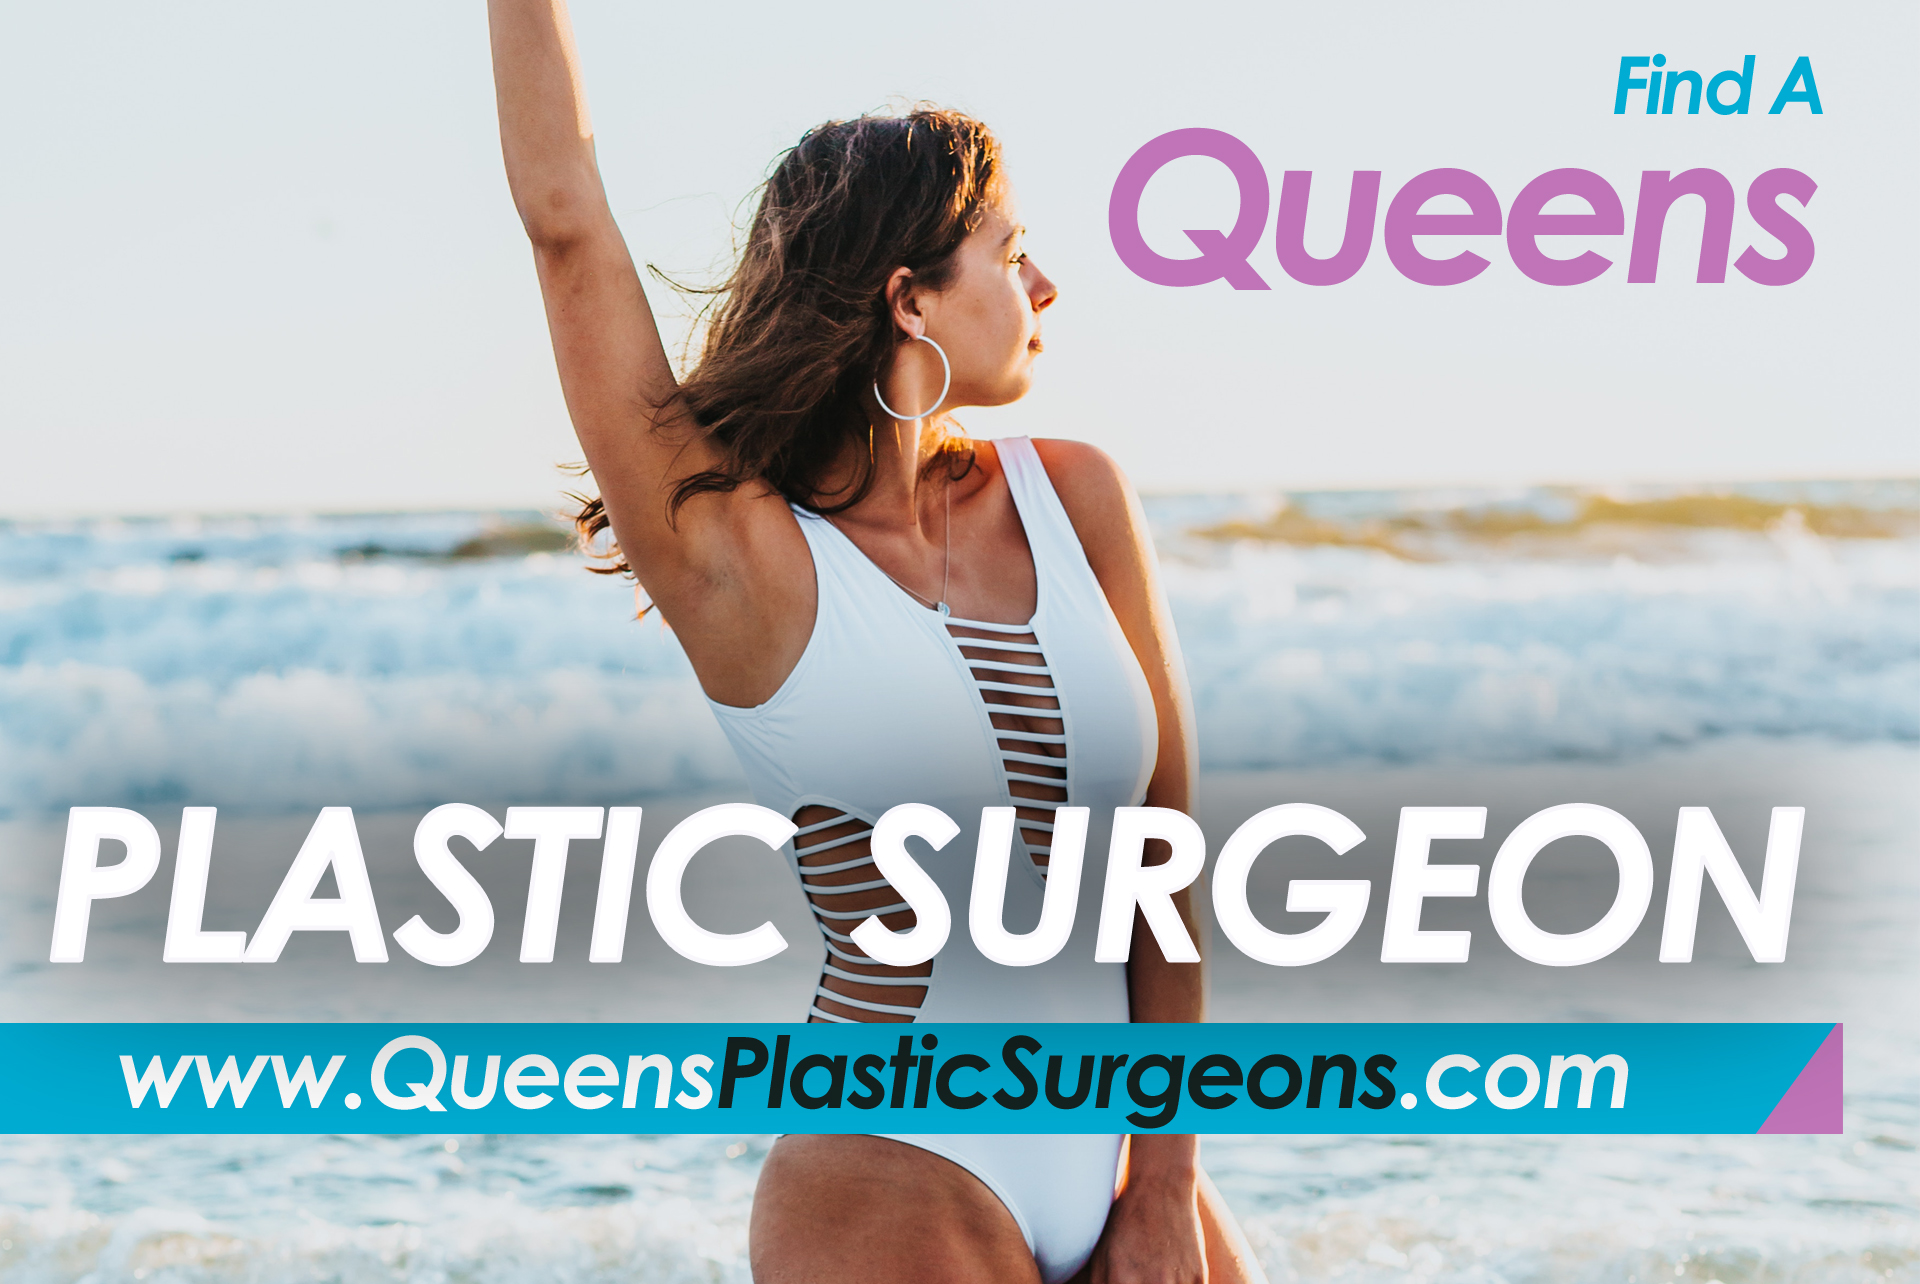 Find a Queens Plastic Surgeon - QueensPlasticSurgeons.com'